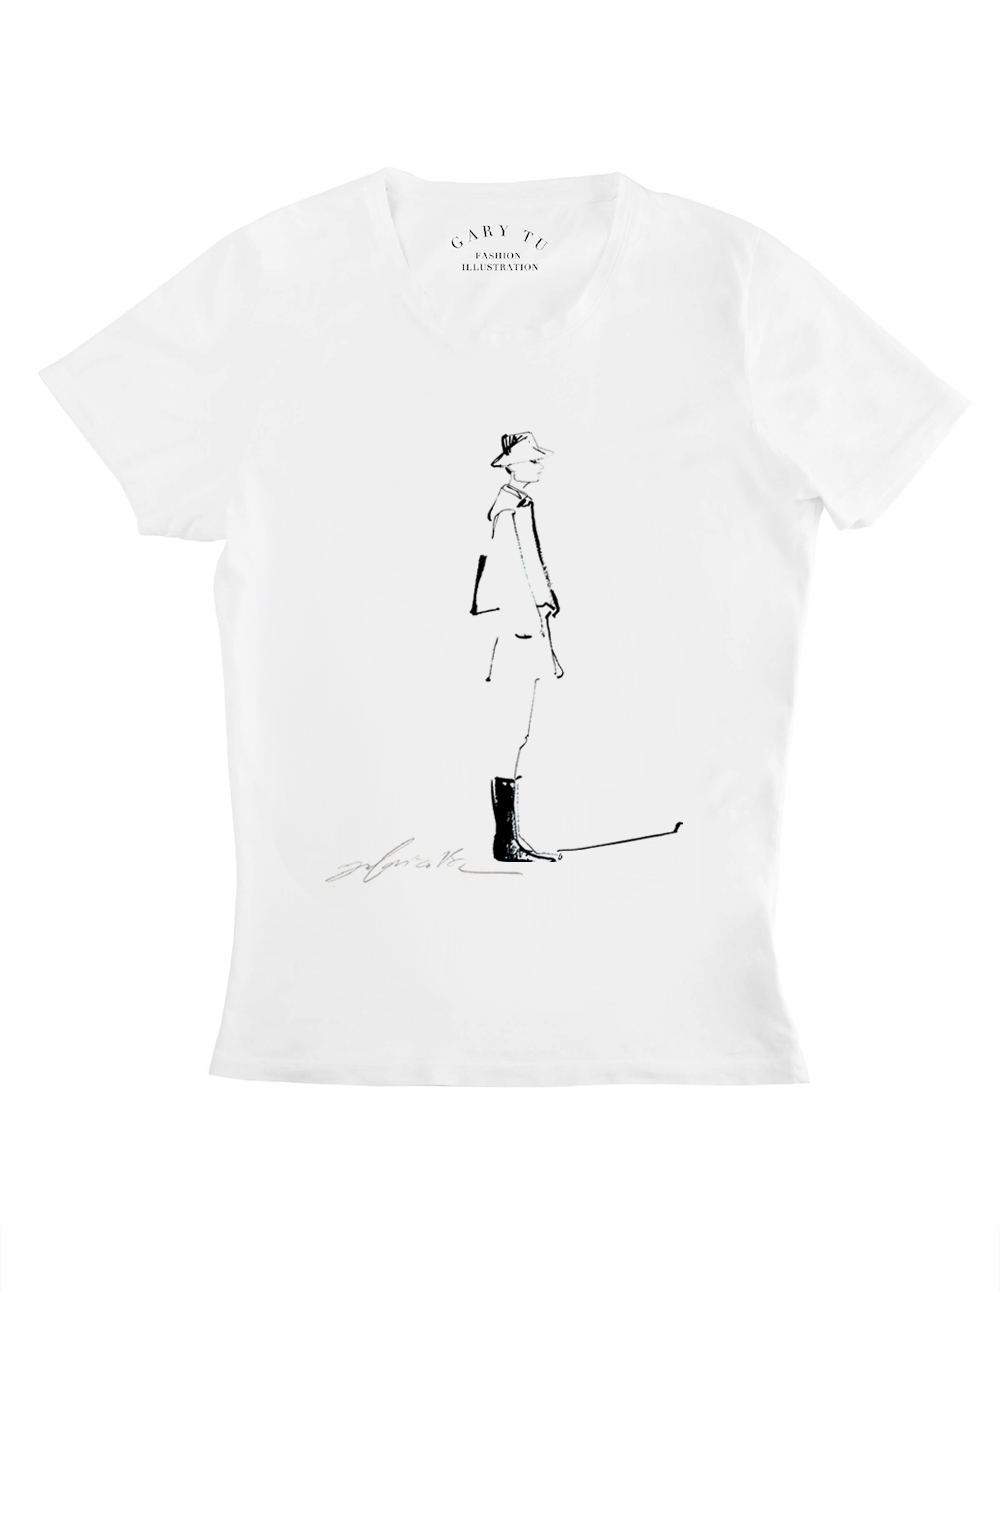 T-shirt Fashion ink 075